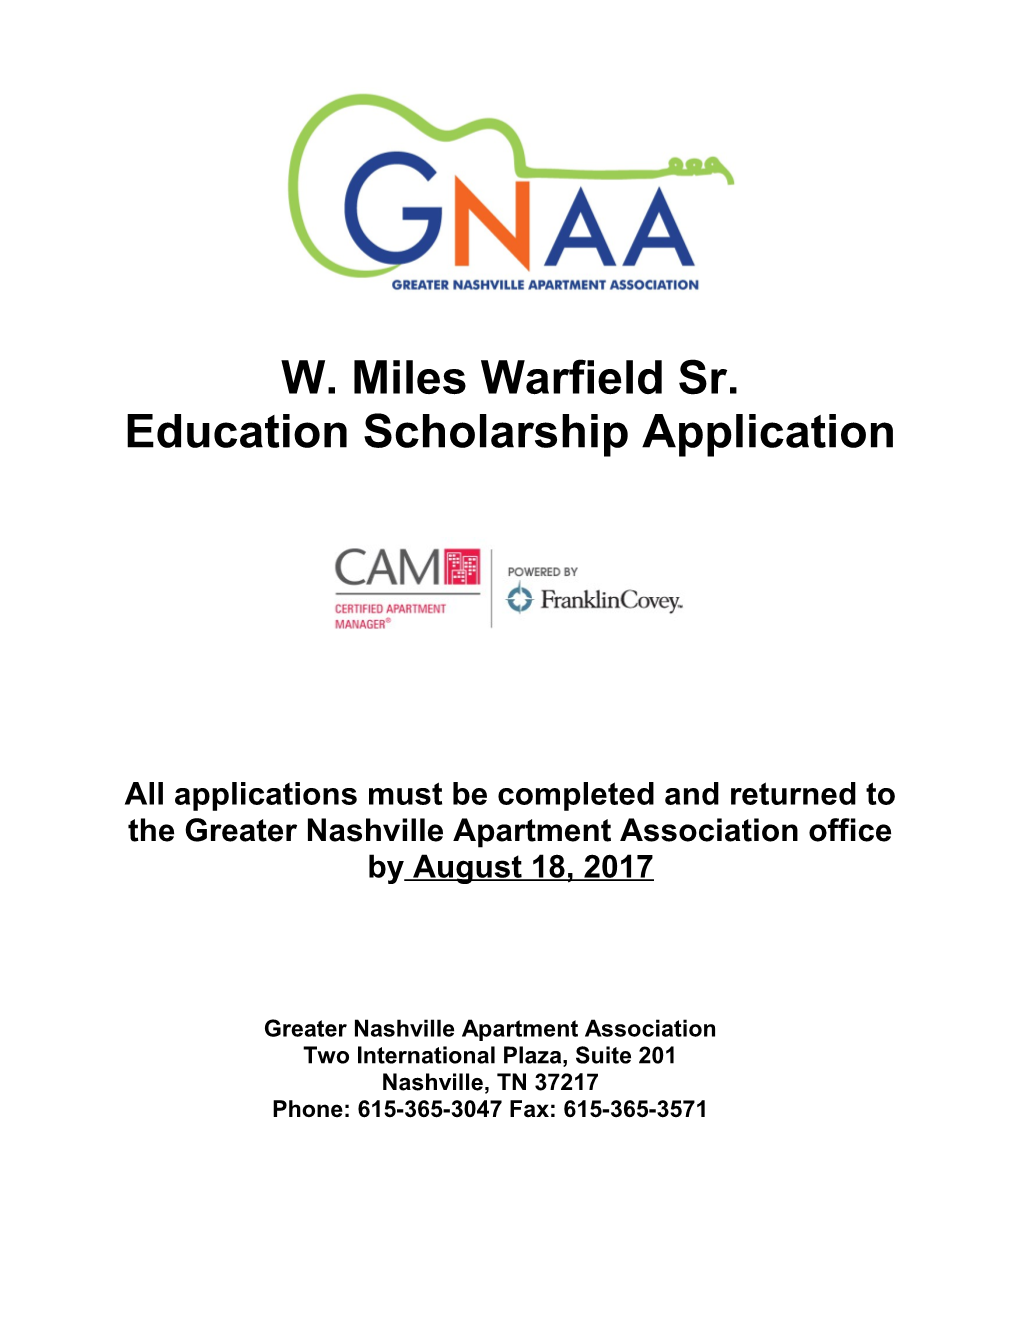 W. Miles Warfield Sr. Education Scholarship Application